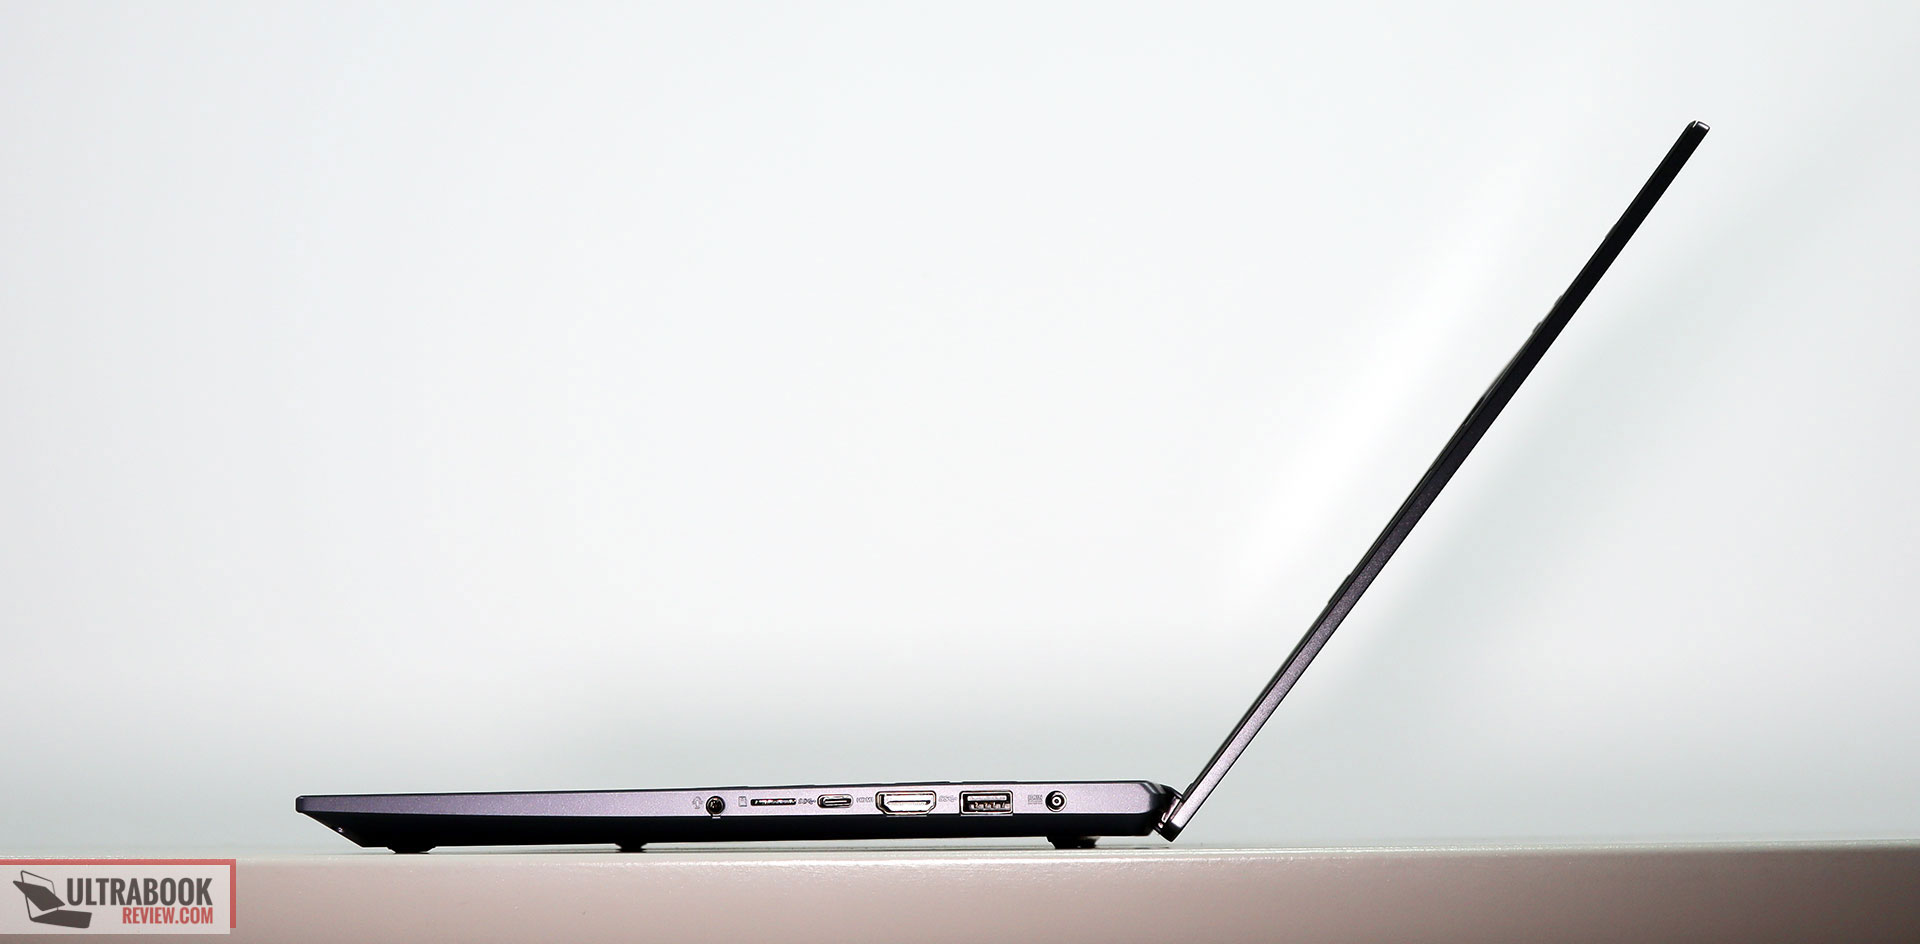 Asus VivoBook Pro 15 review